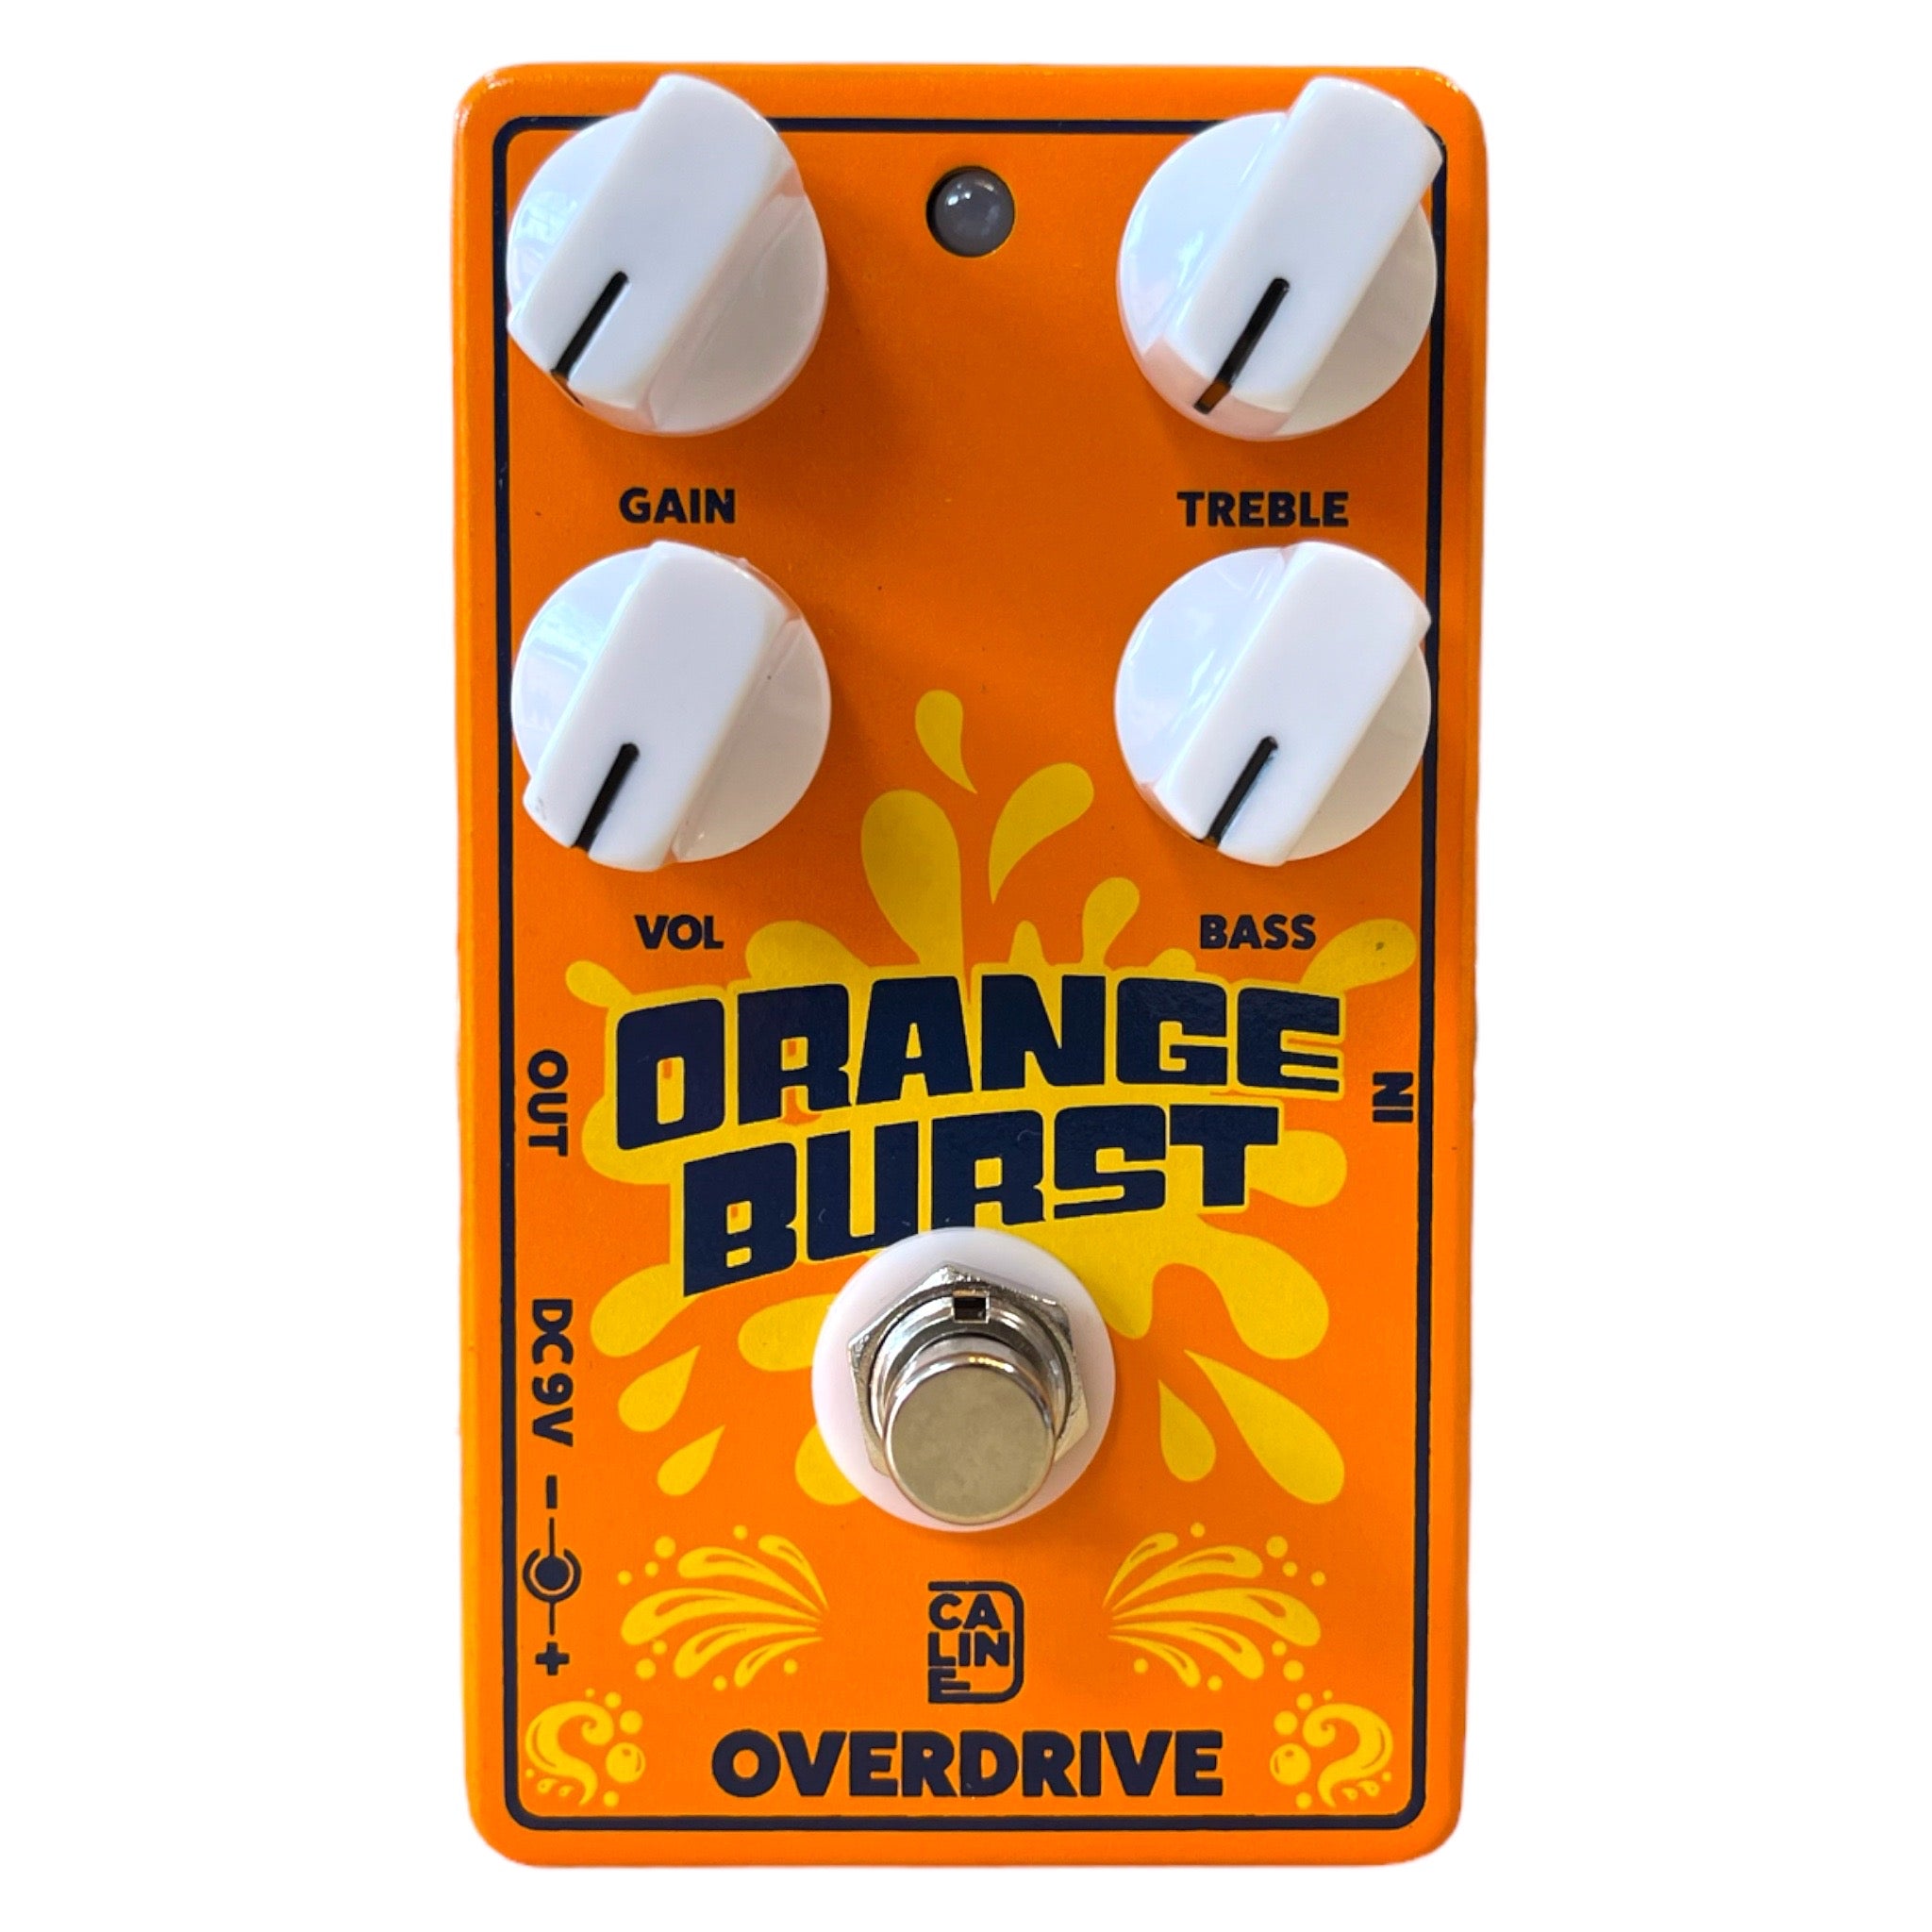 Caline CP-518 Orange Burst Overdrive Guitar Pedal